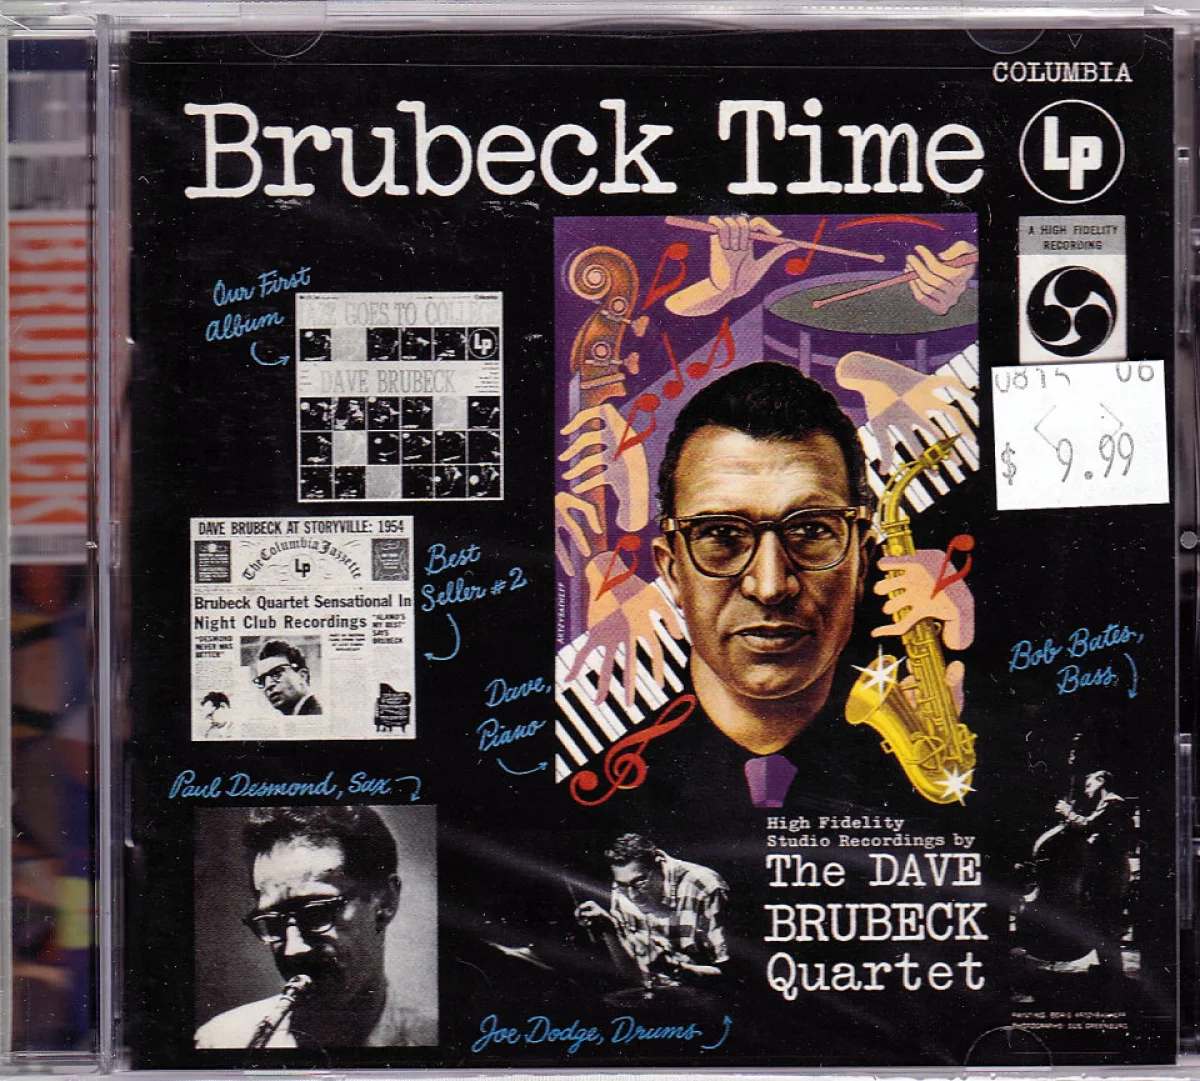 The Dave Brubeck Quartet CD, 1946 at Wolfgang's